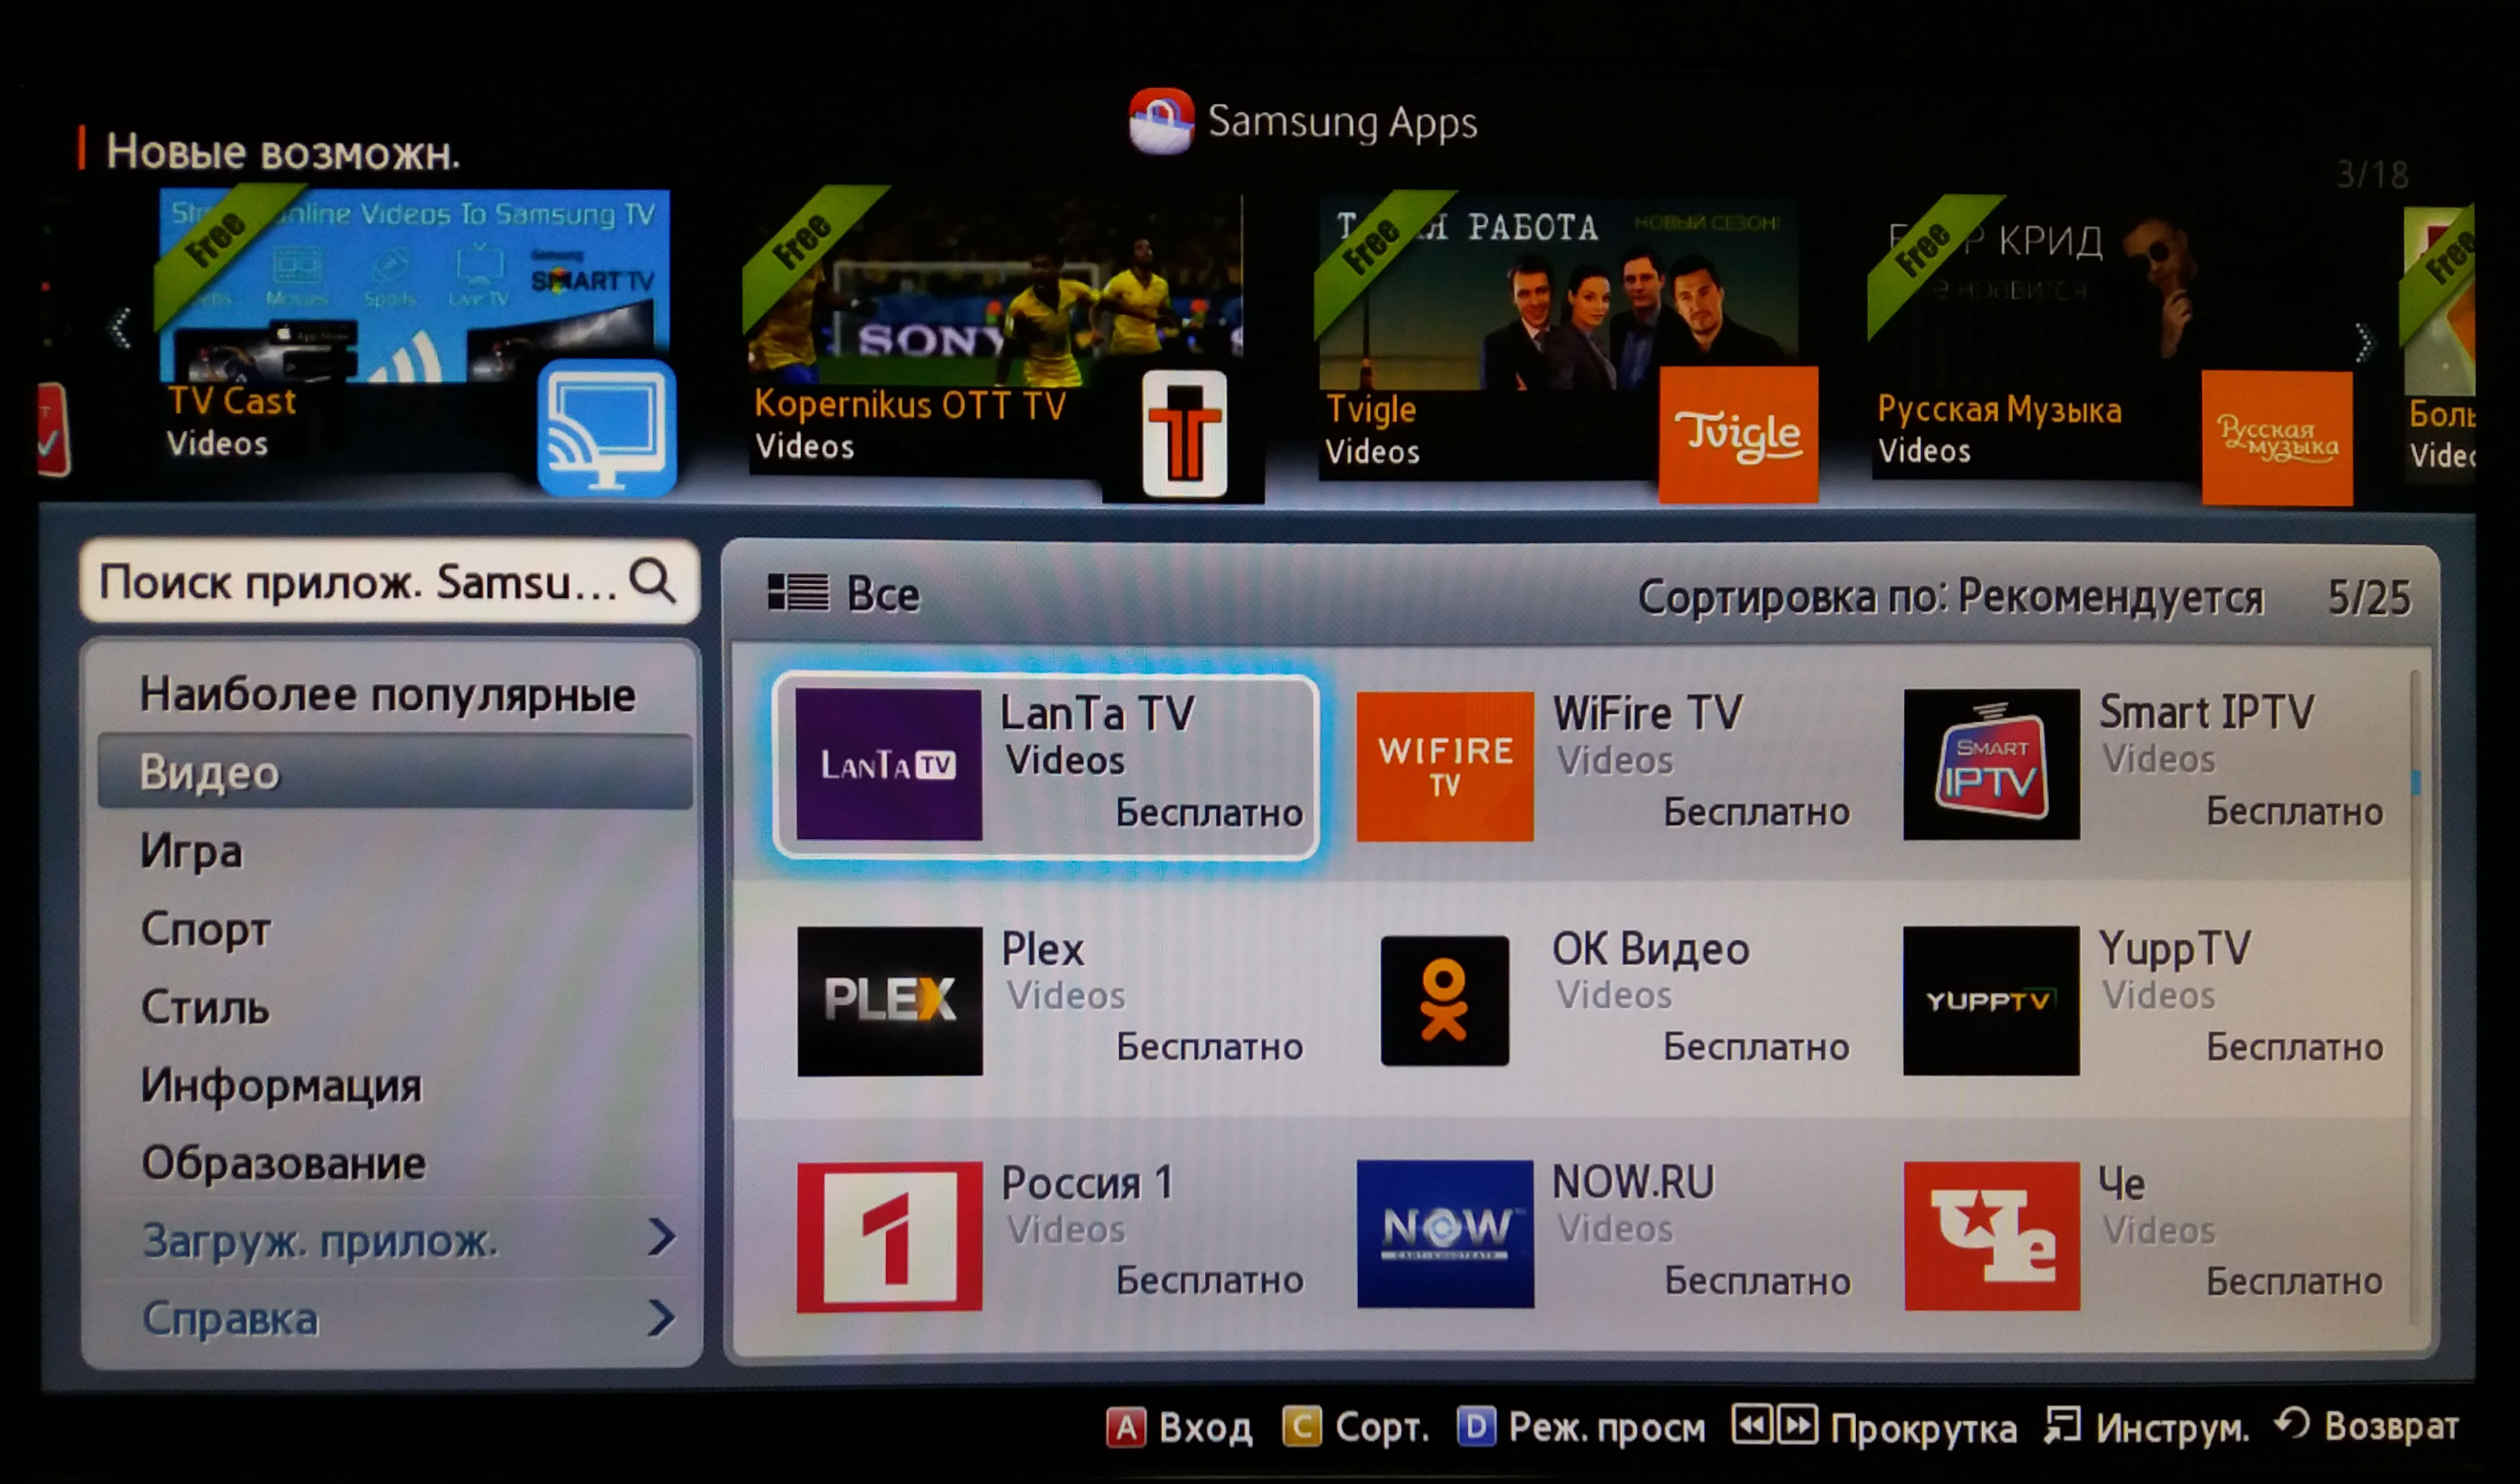 Телевизор самсунг приложение кинопоиск. Samsung Smart TV приложения. Samsung apps для Smart TV. IPTV на смарт телевизоре. Samsung apps на телевизоре.